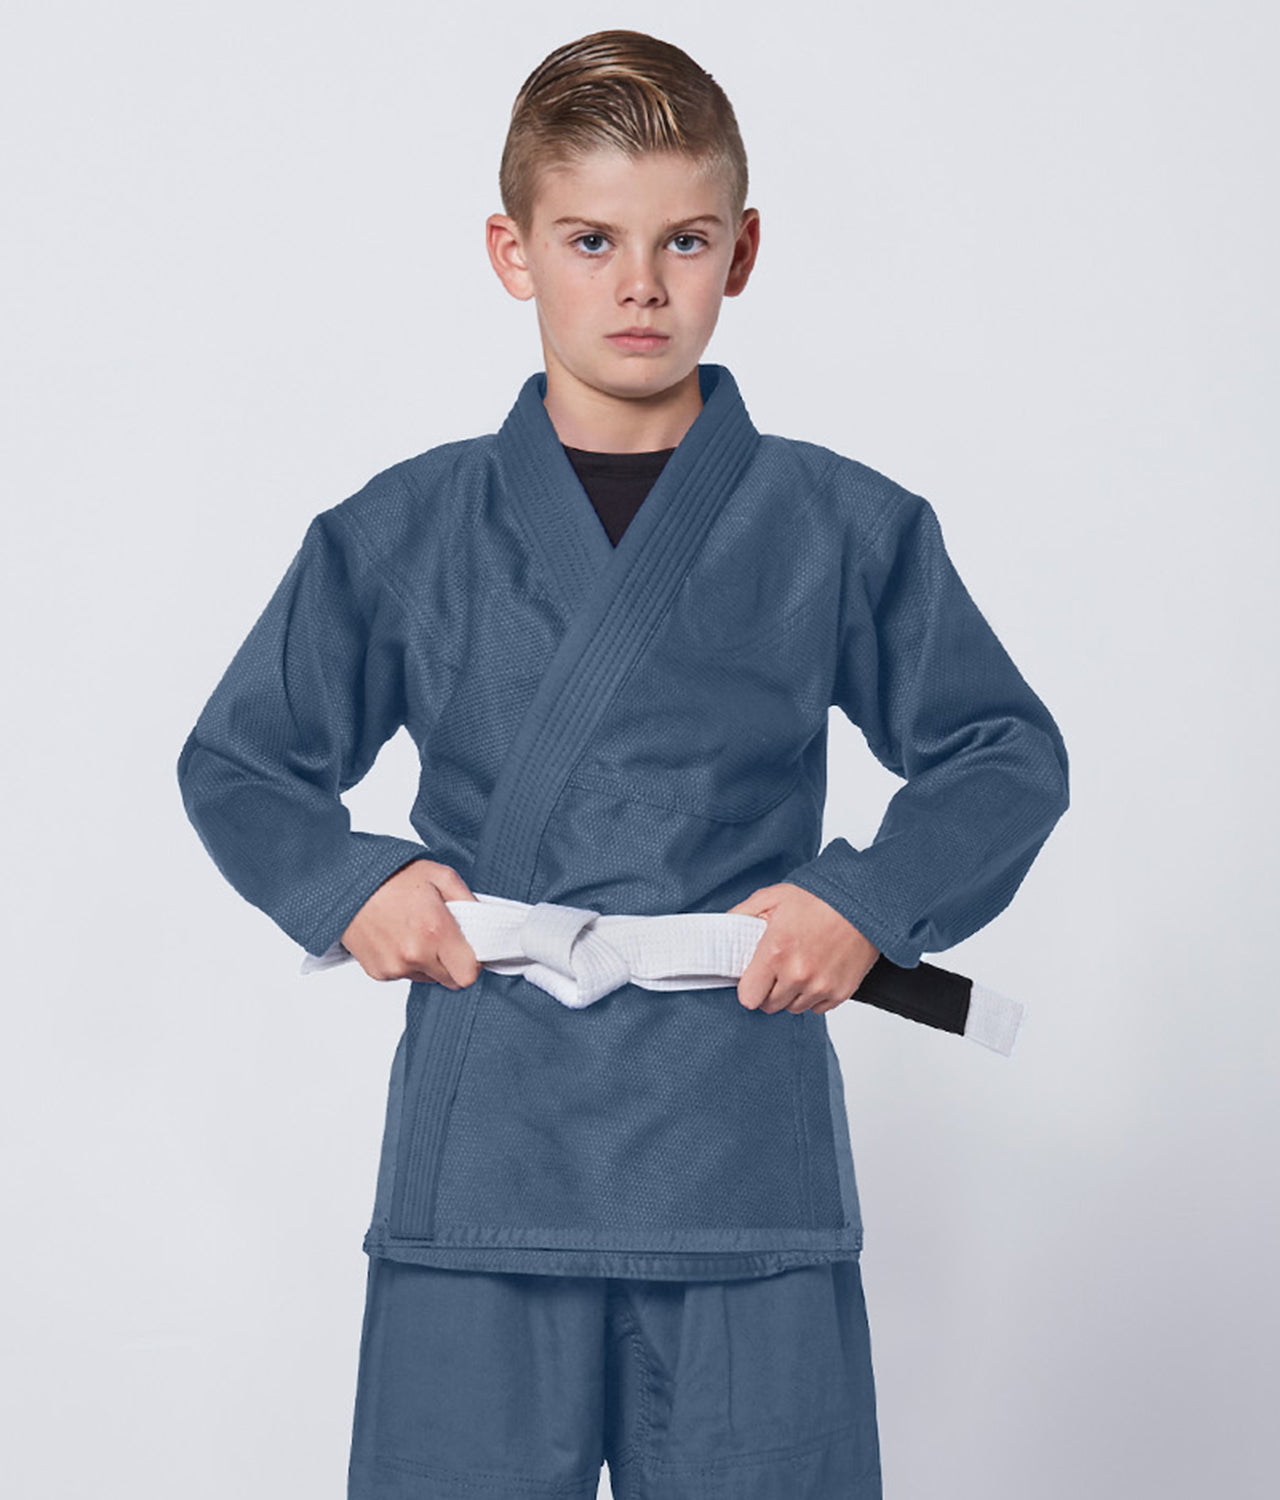 Kids' Essential Gray Brazilian Jiu Jitsu BJJ Gi